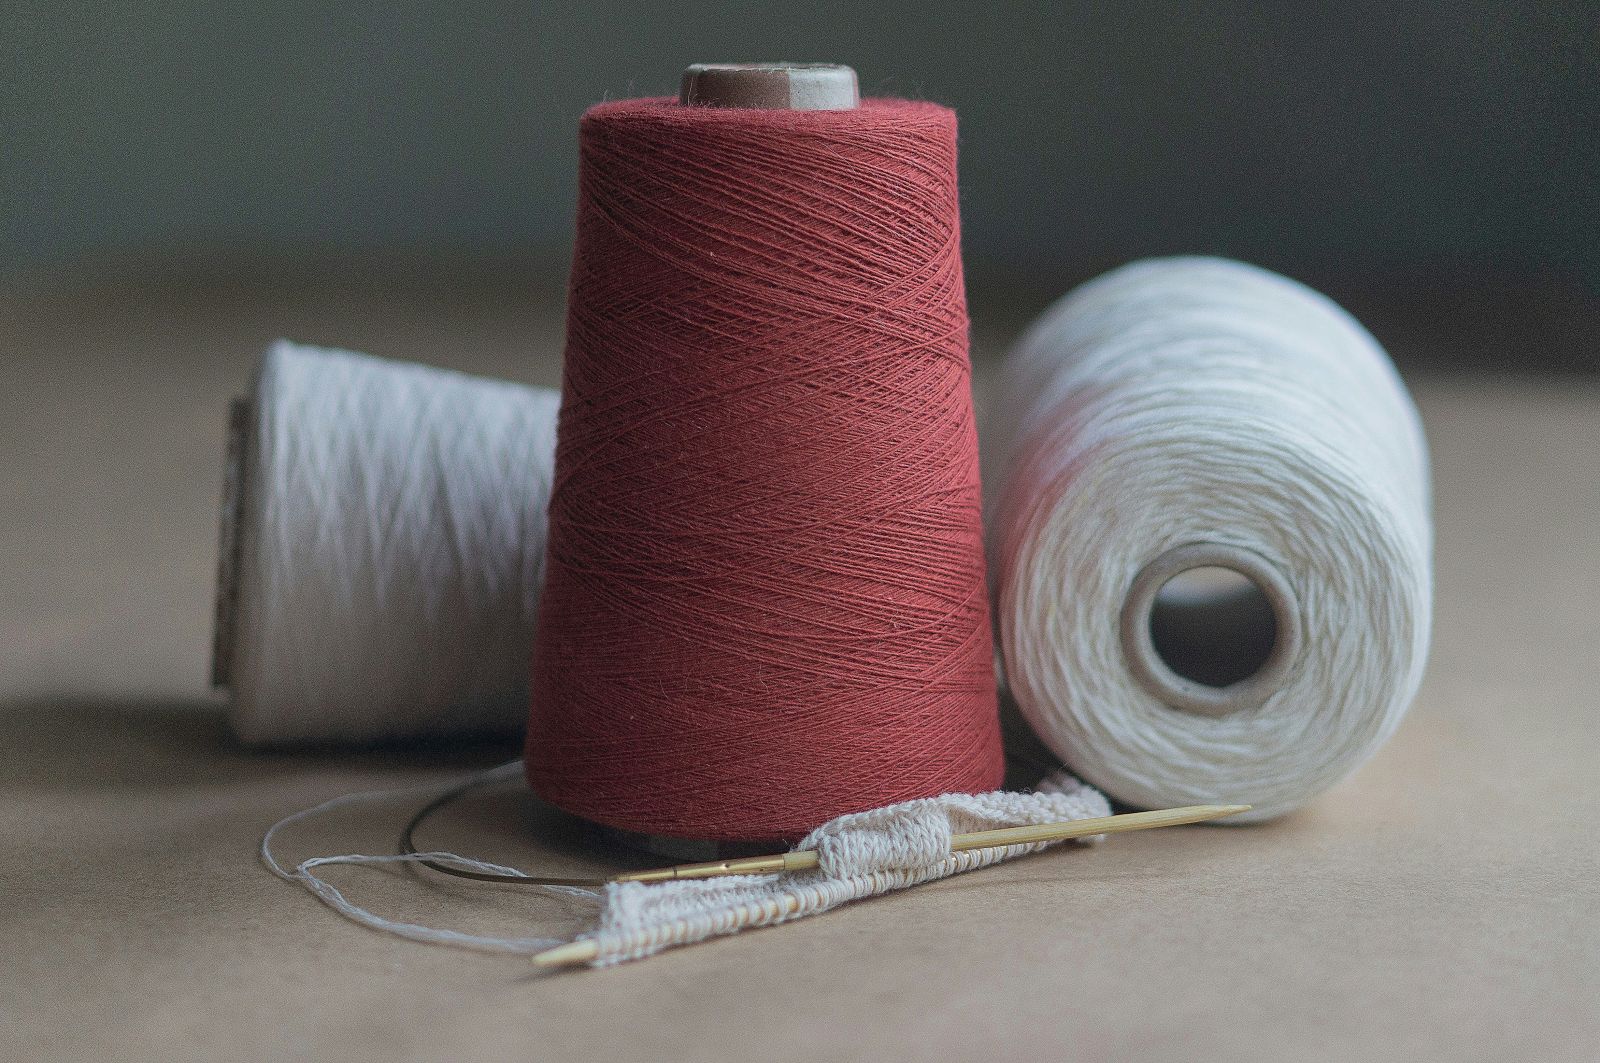 Rolls of cotton thread by Marina Ermakova via Unsplash